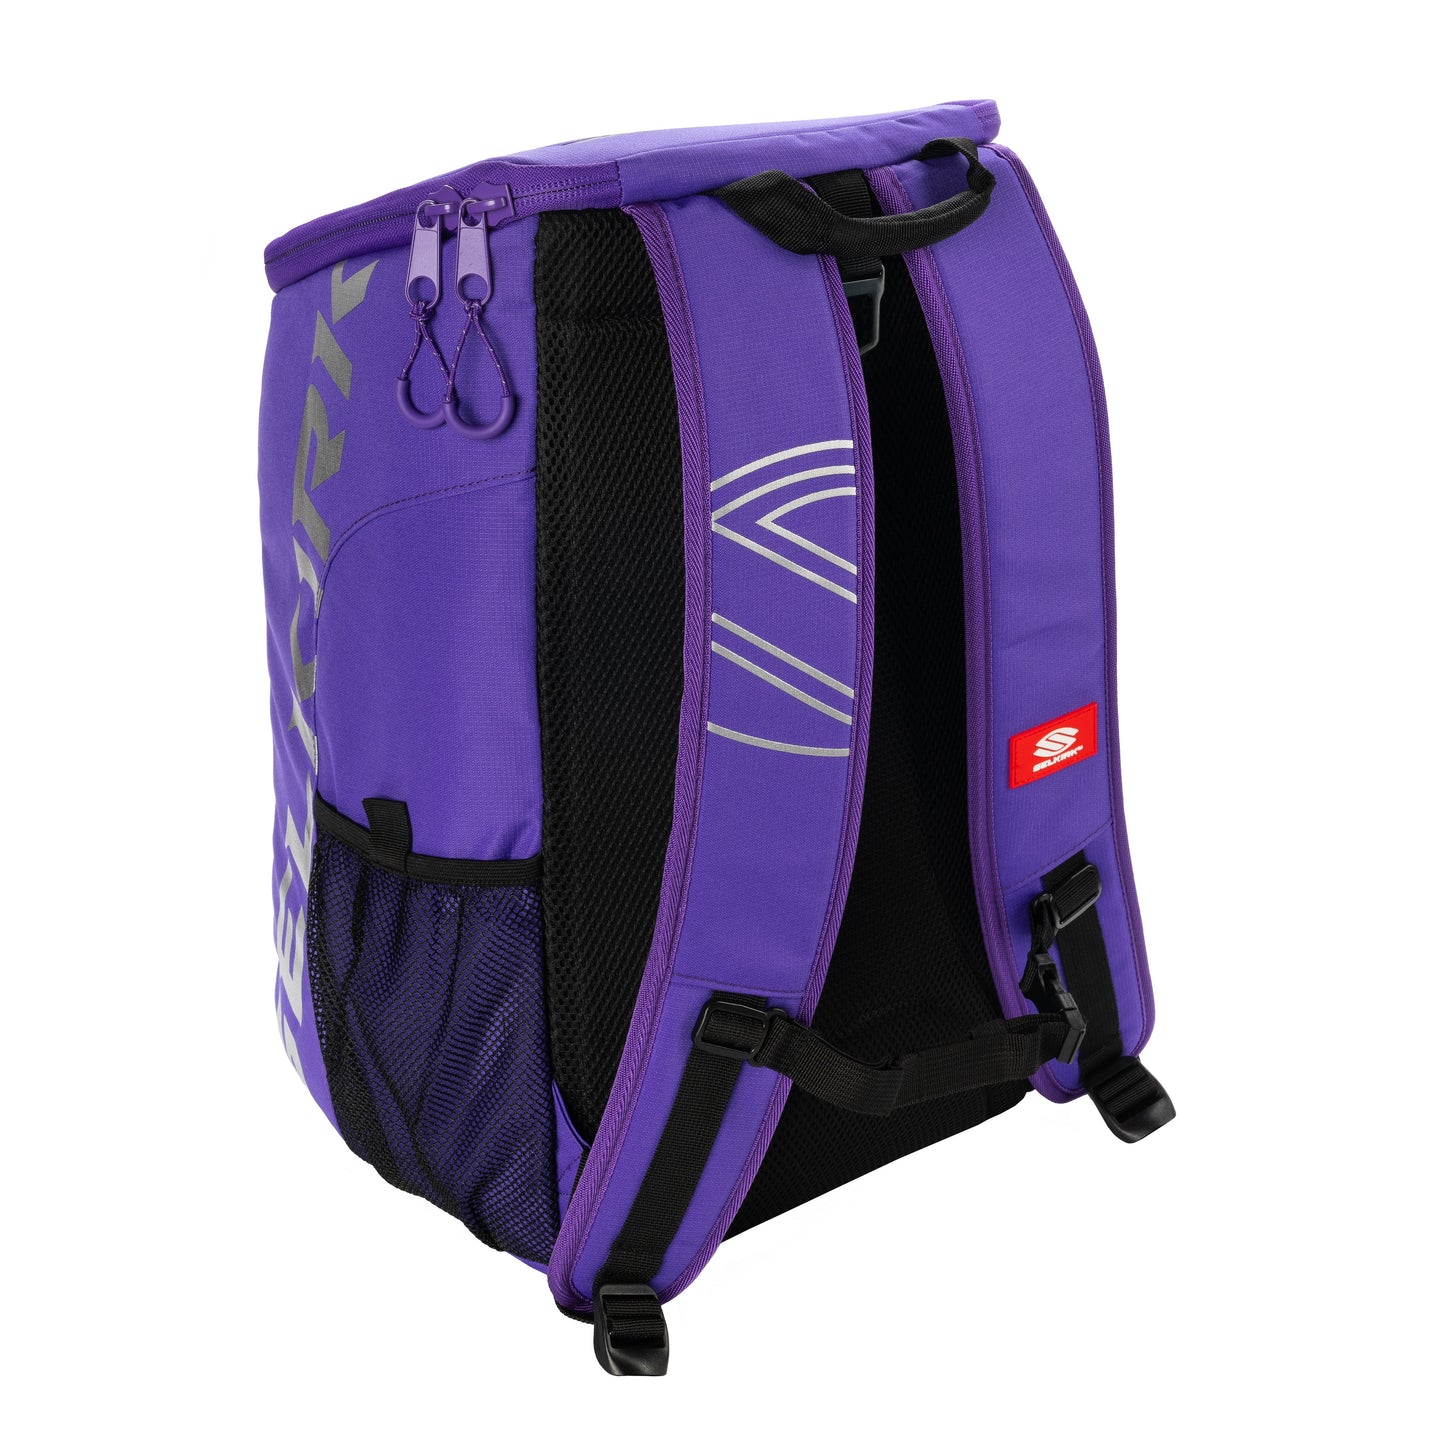 A Selkirk Core Series Team Backpack Pickleball Bag with a zipper.